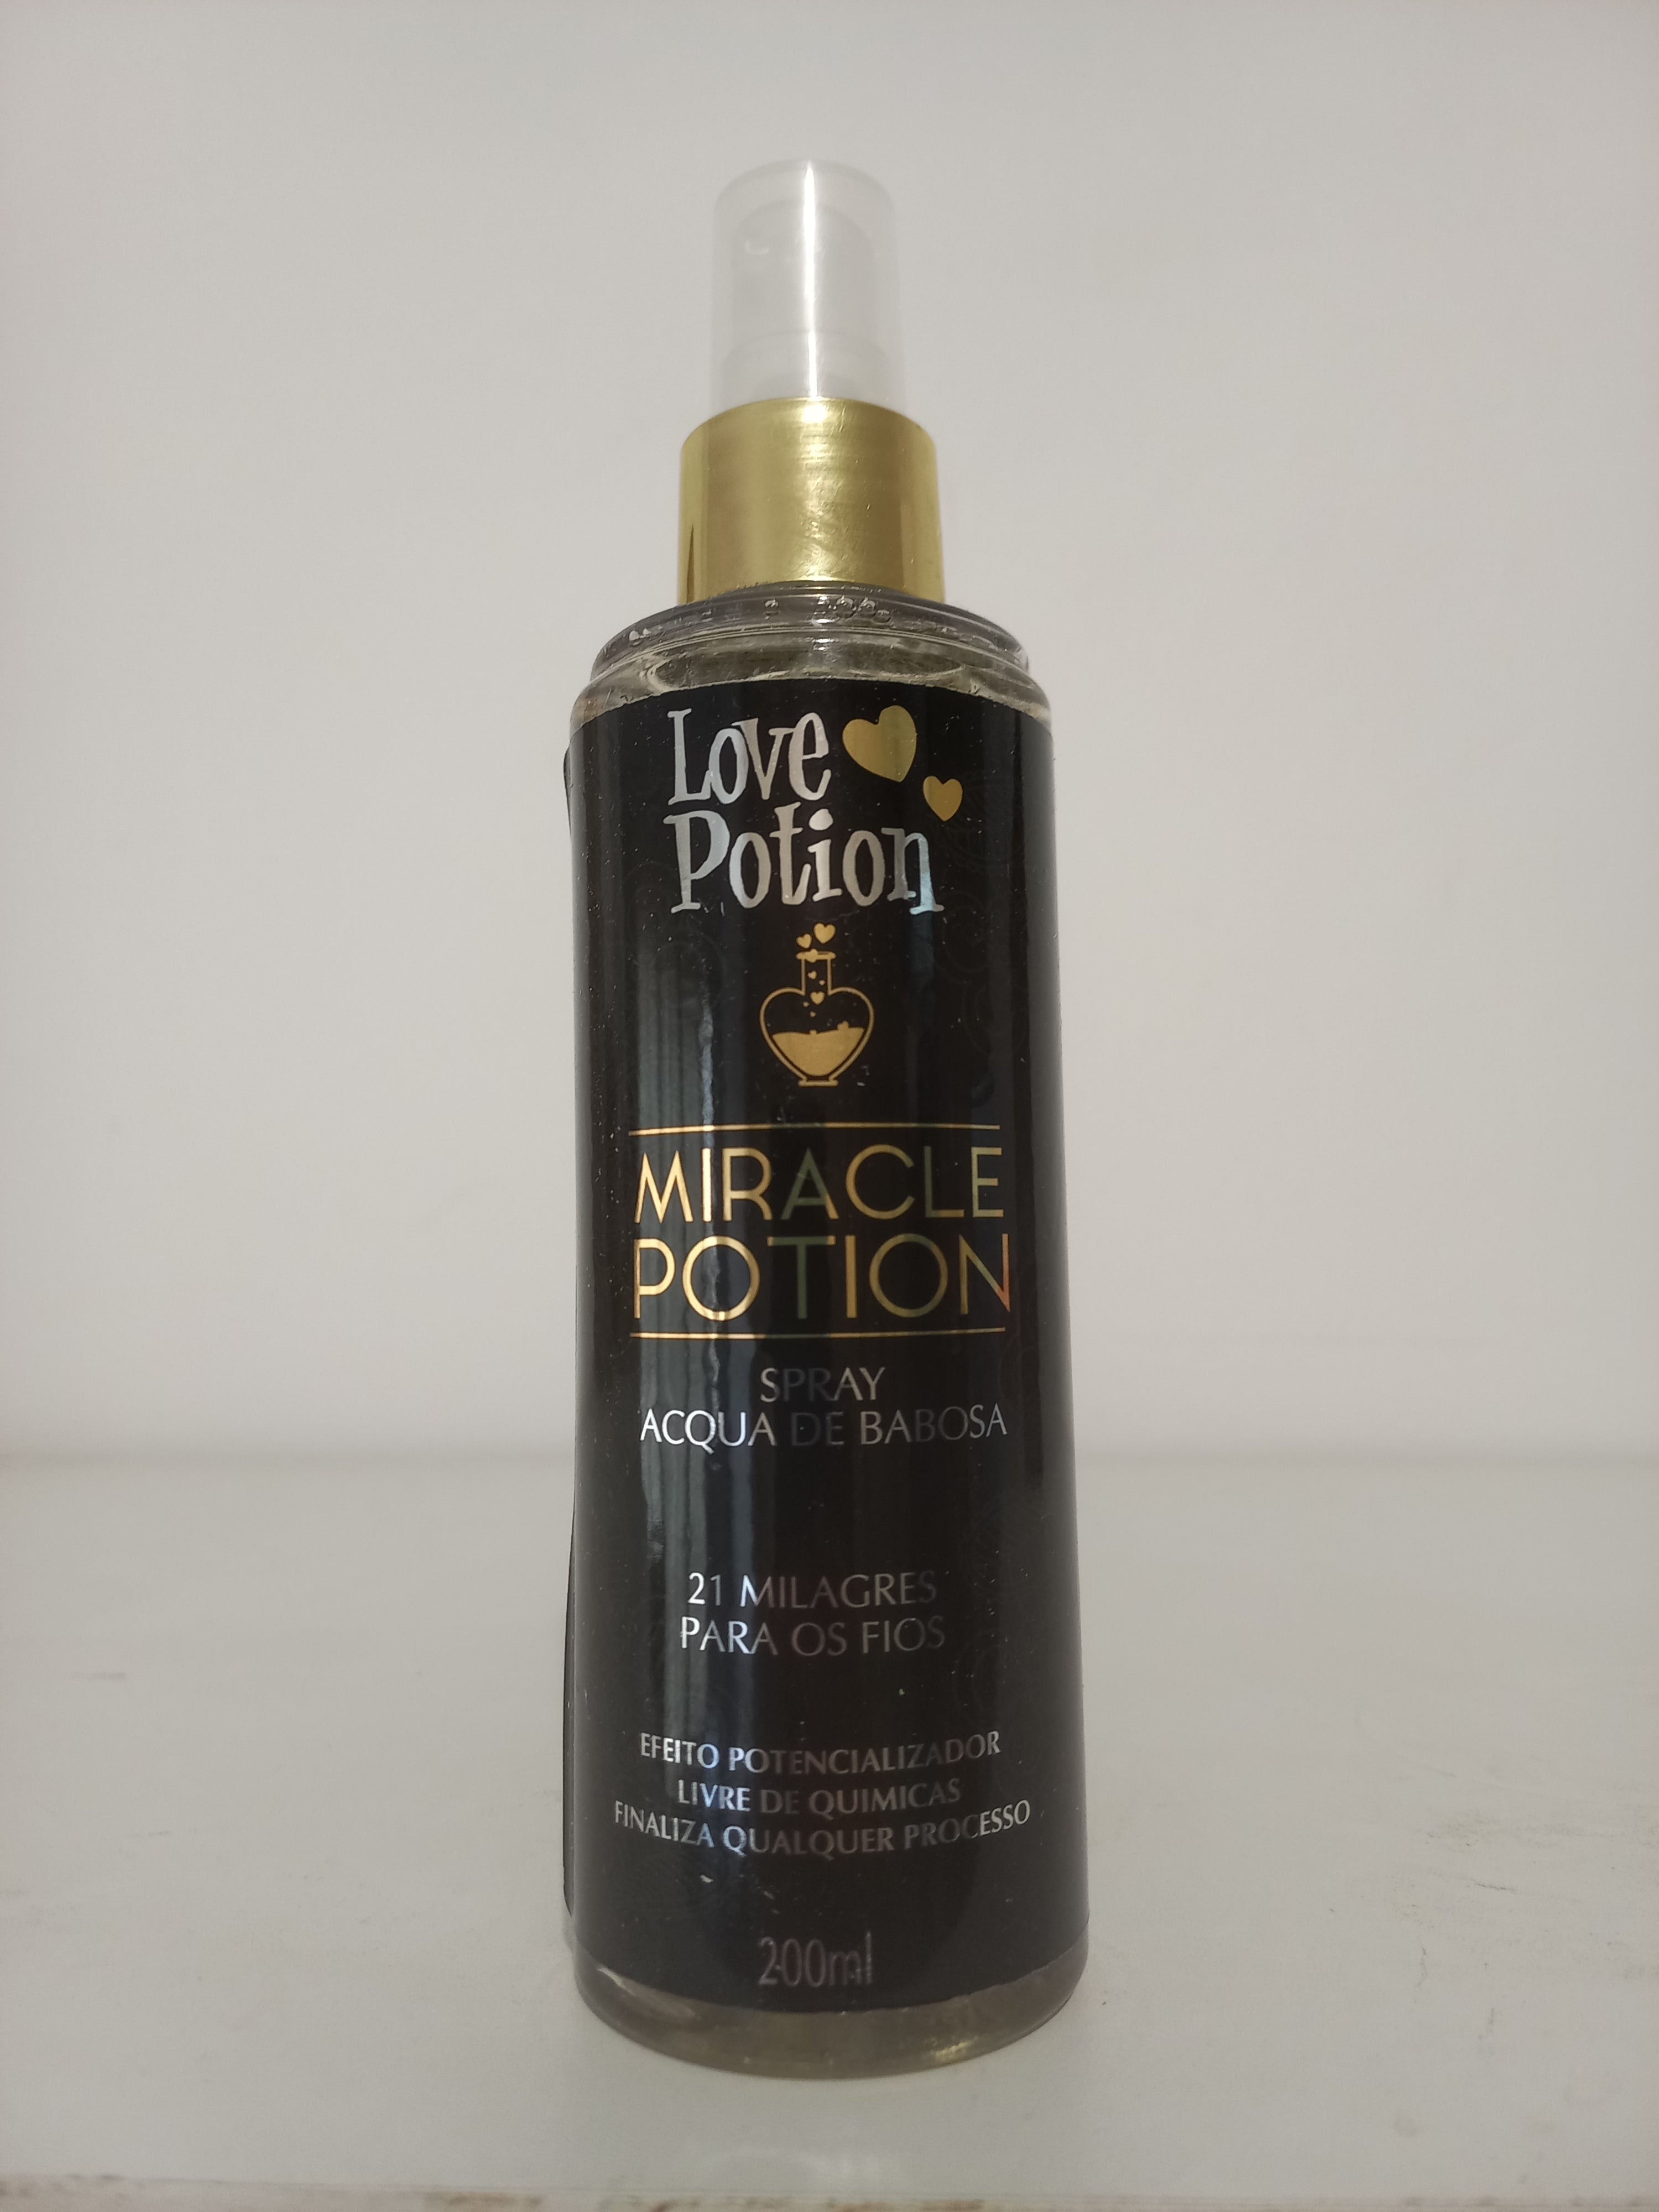 Love Potion Spray Brazilian 21 Benefits Miracle Potion Aloe Vera Acqua Spray 200ml - Love Potion